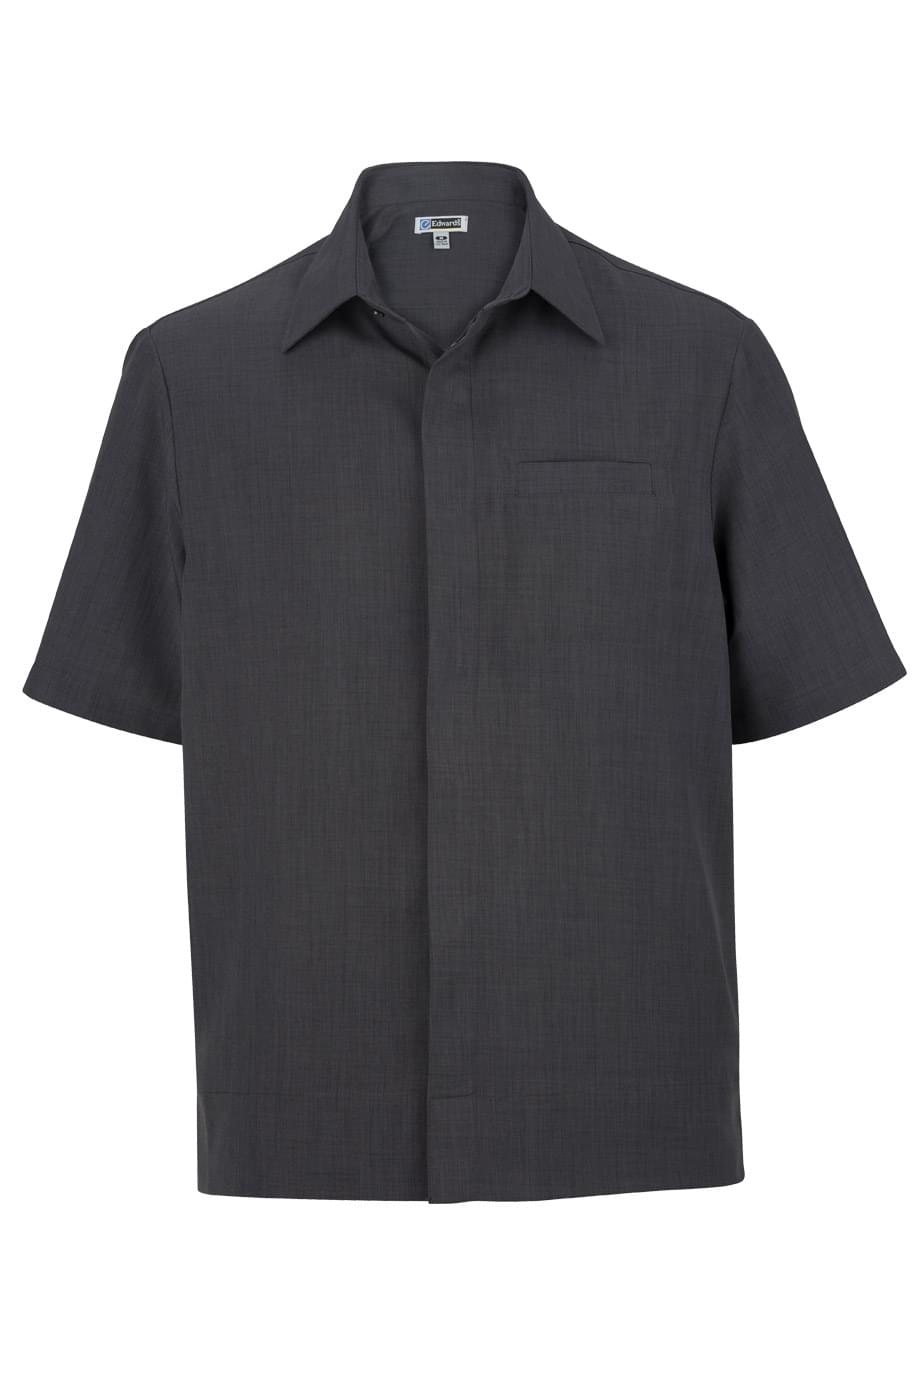 Ed Garments unisex 1031 BATISTE CAMP button down shirt STEEL GREY 6X-L-T